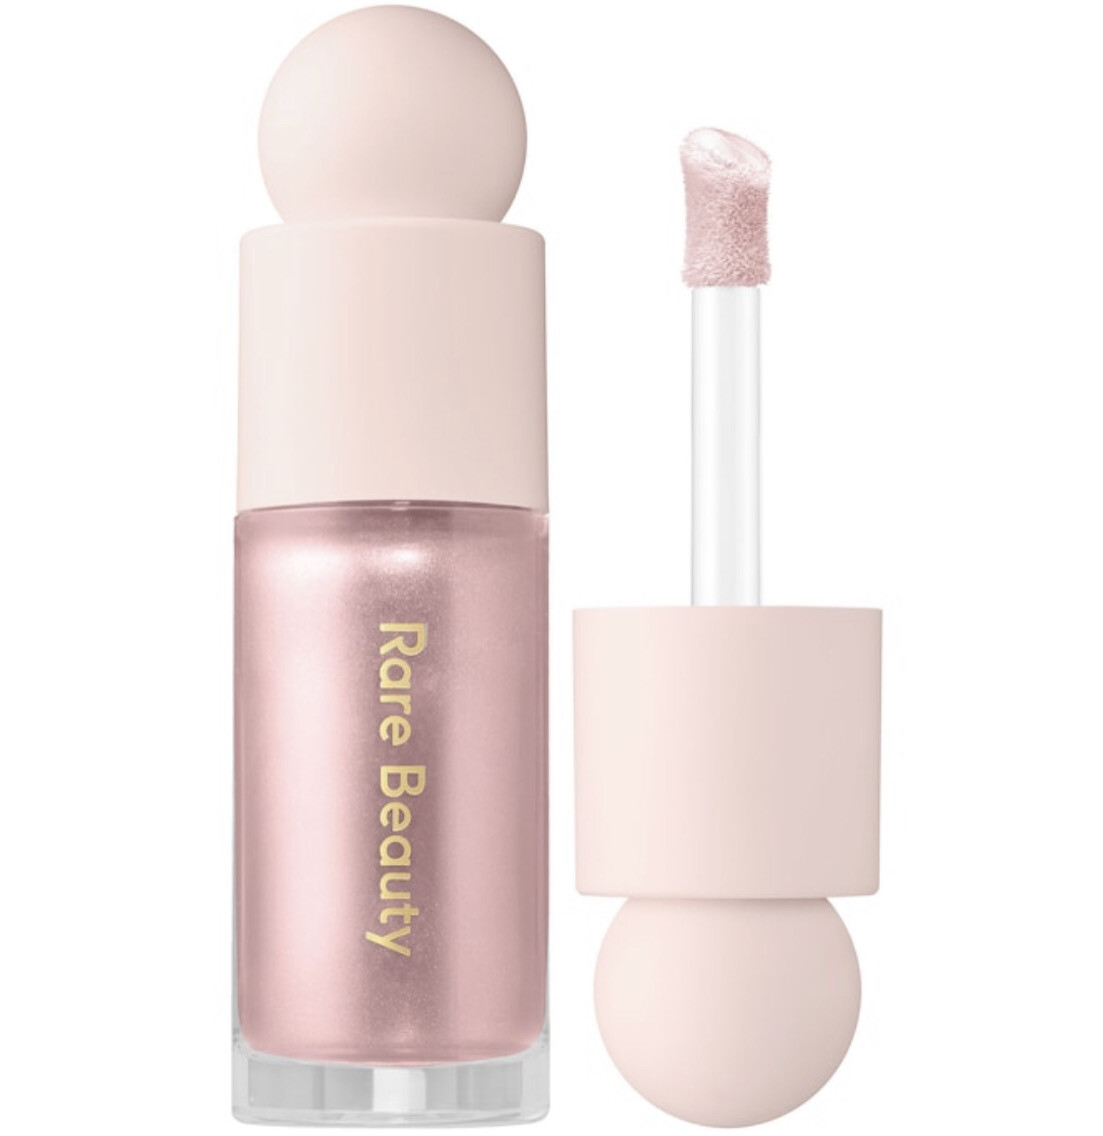 Rare Beauty - Positive Light Liquid Luminizer Highlight | Enchant - soft pink